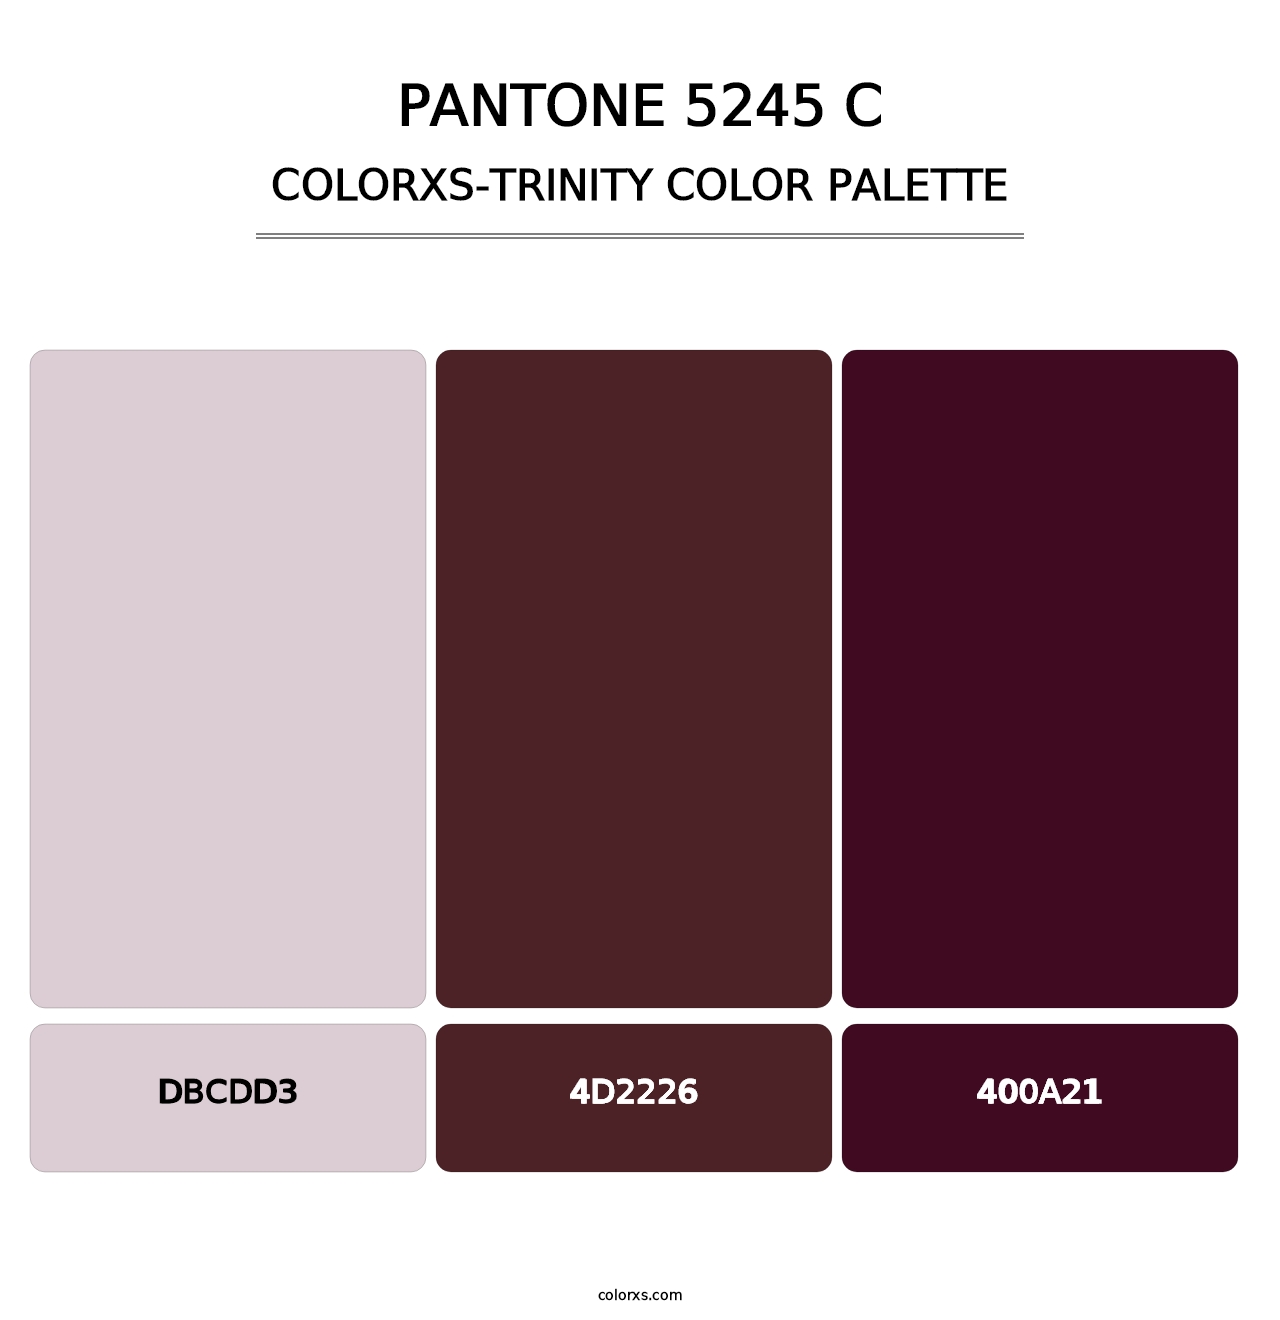 PANTONE 5245 C - Colorxs Trinity Palette